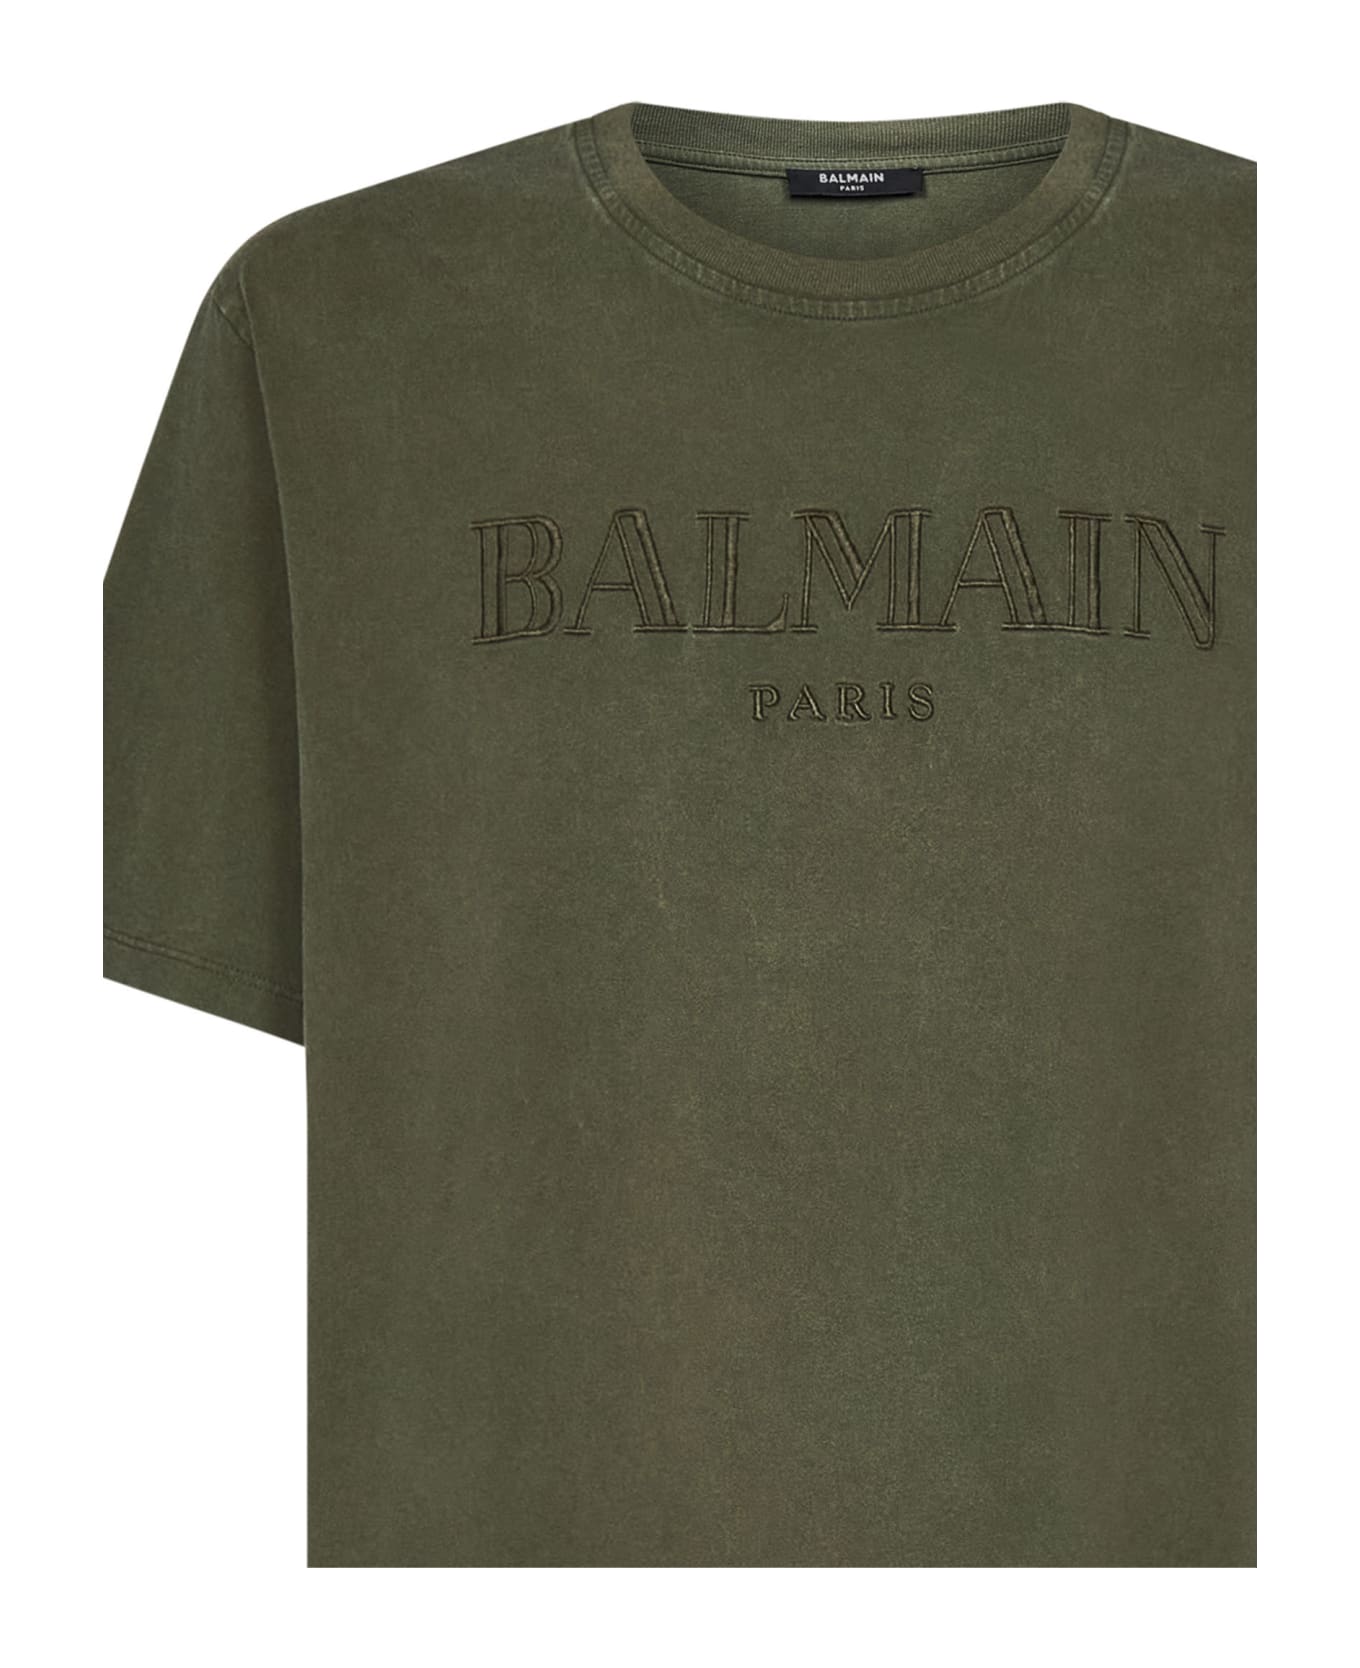 Balmain Paris T-shirt - Green